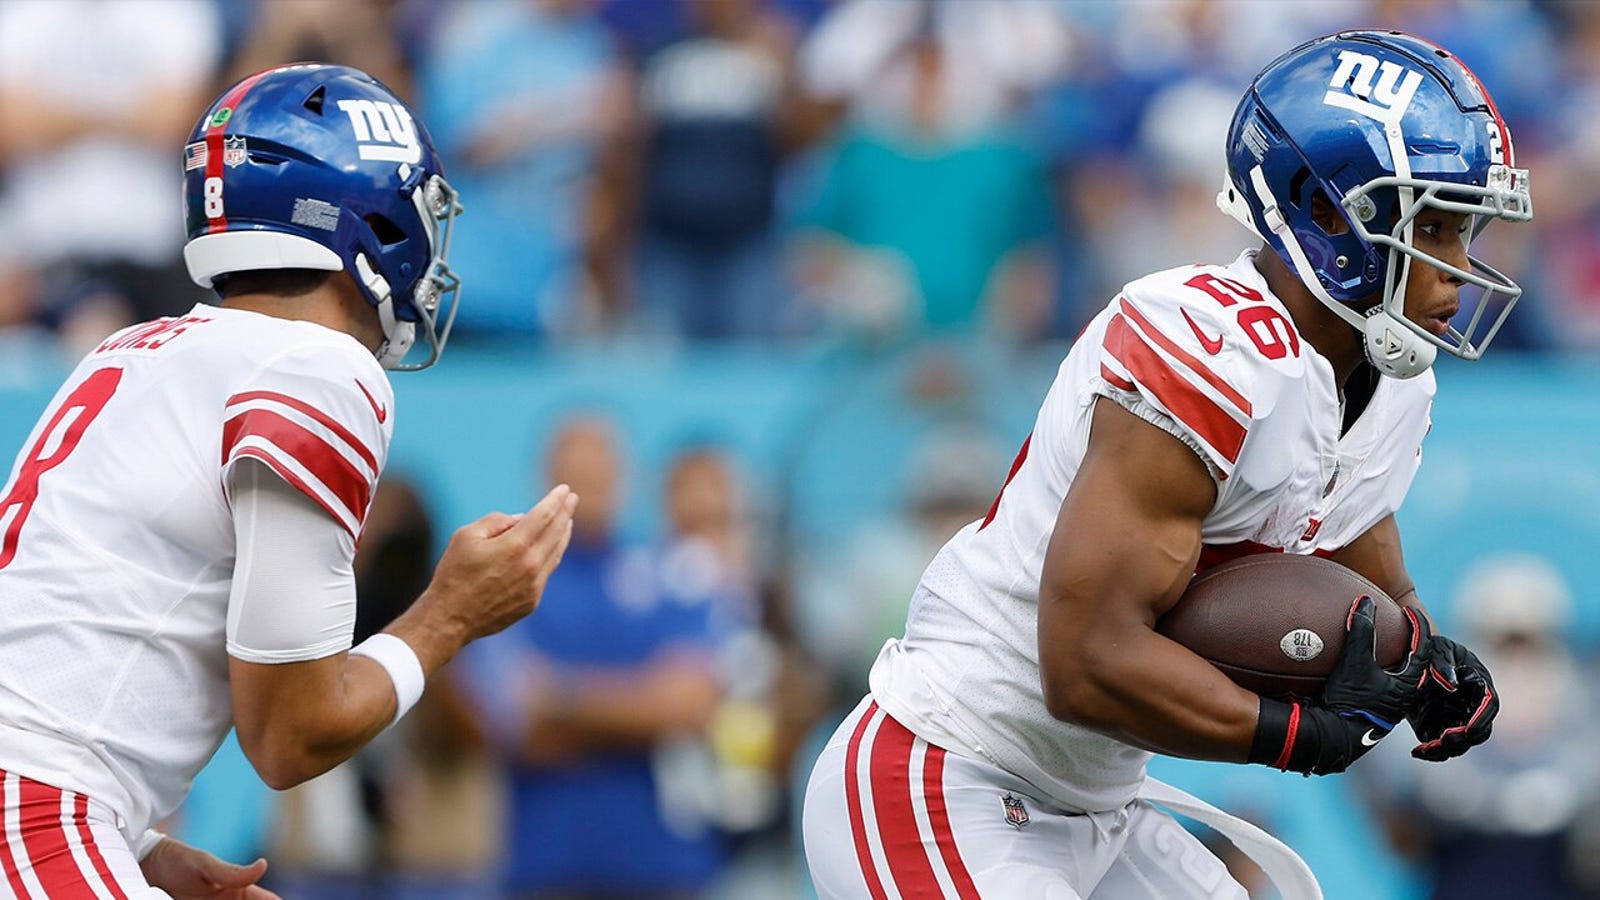 Saquon Barkley sparks Giants' 21-20 comeback win over Titans